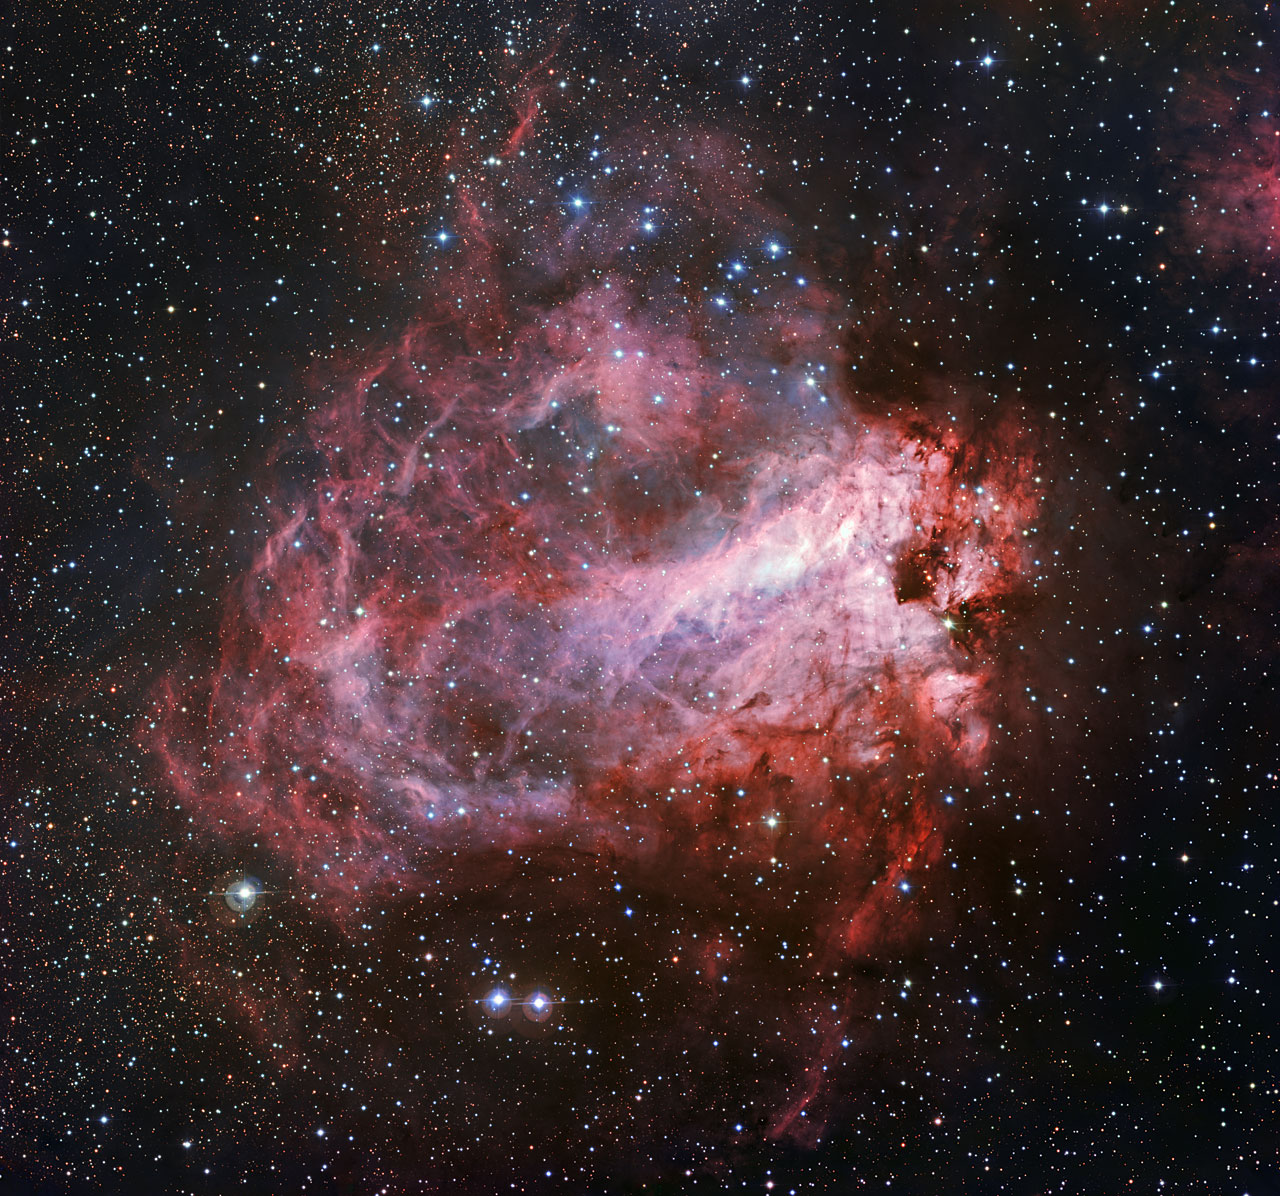 The star formation region Messier 17